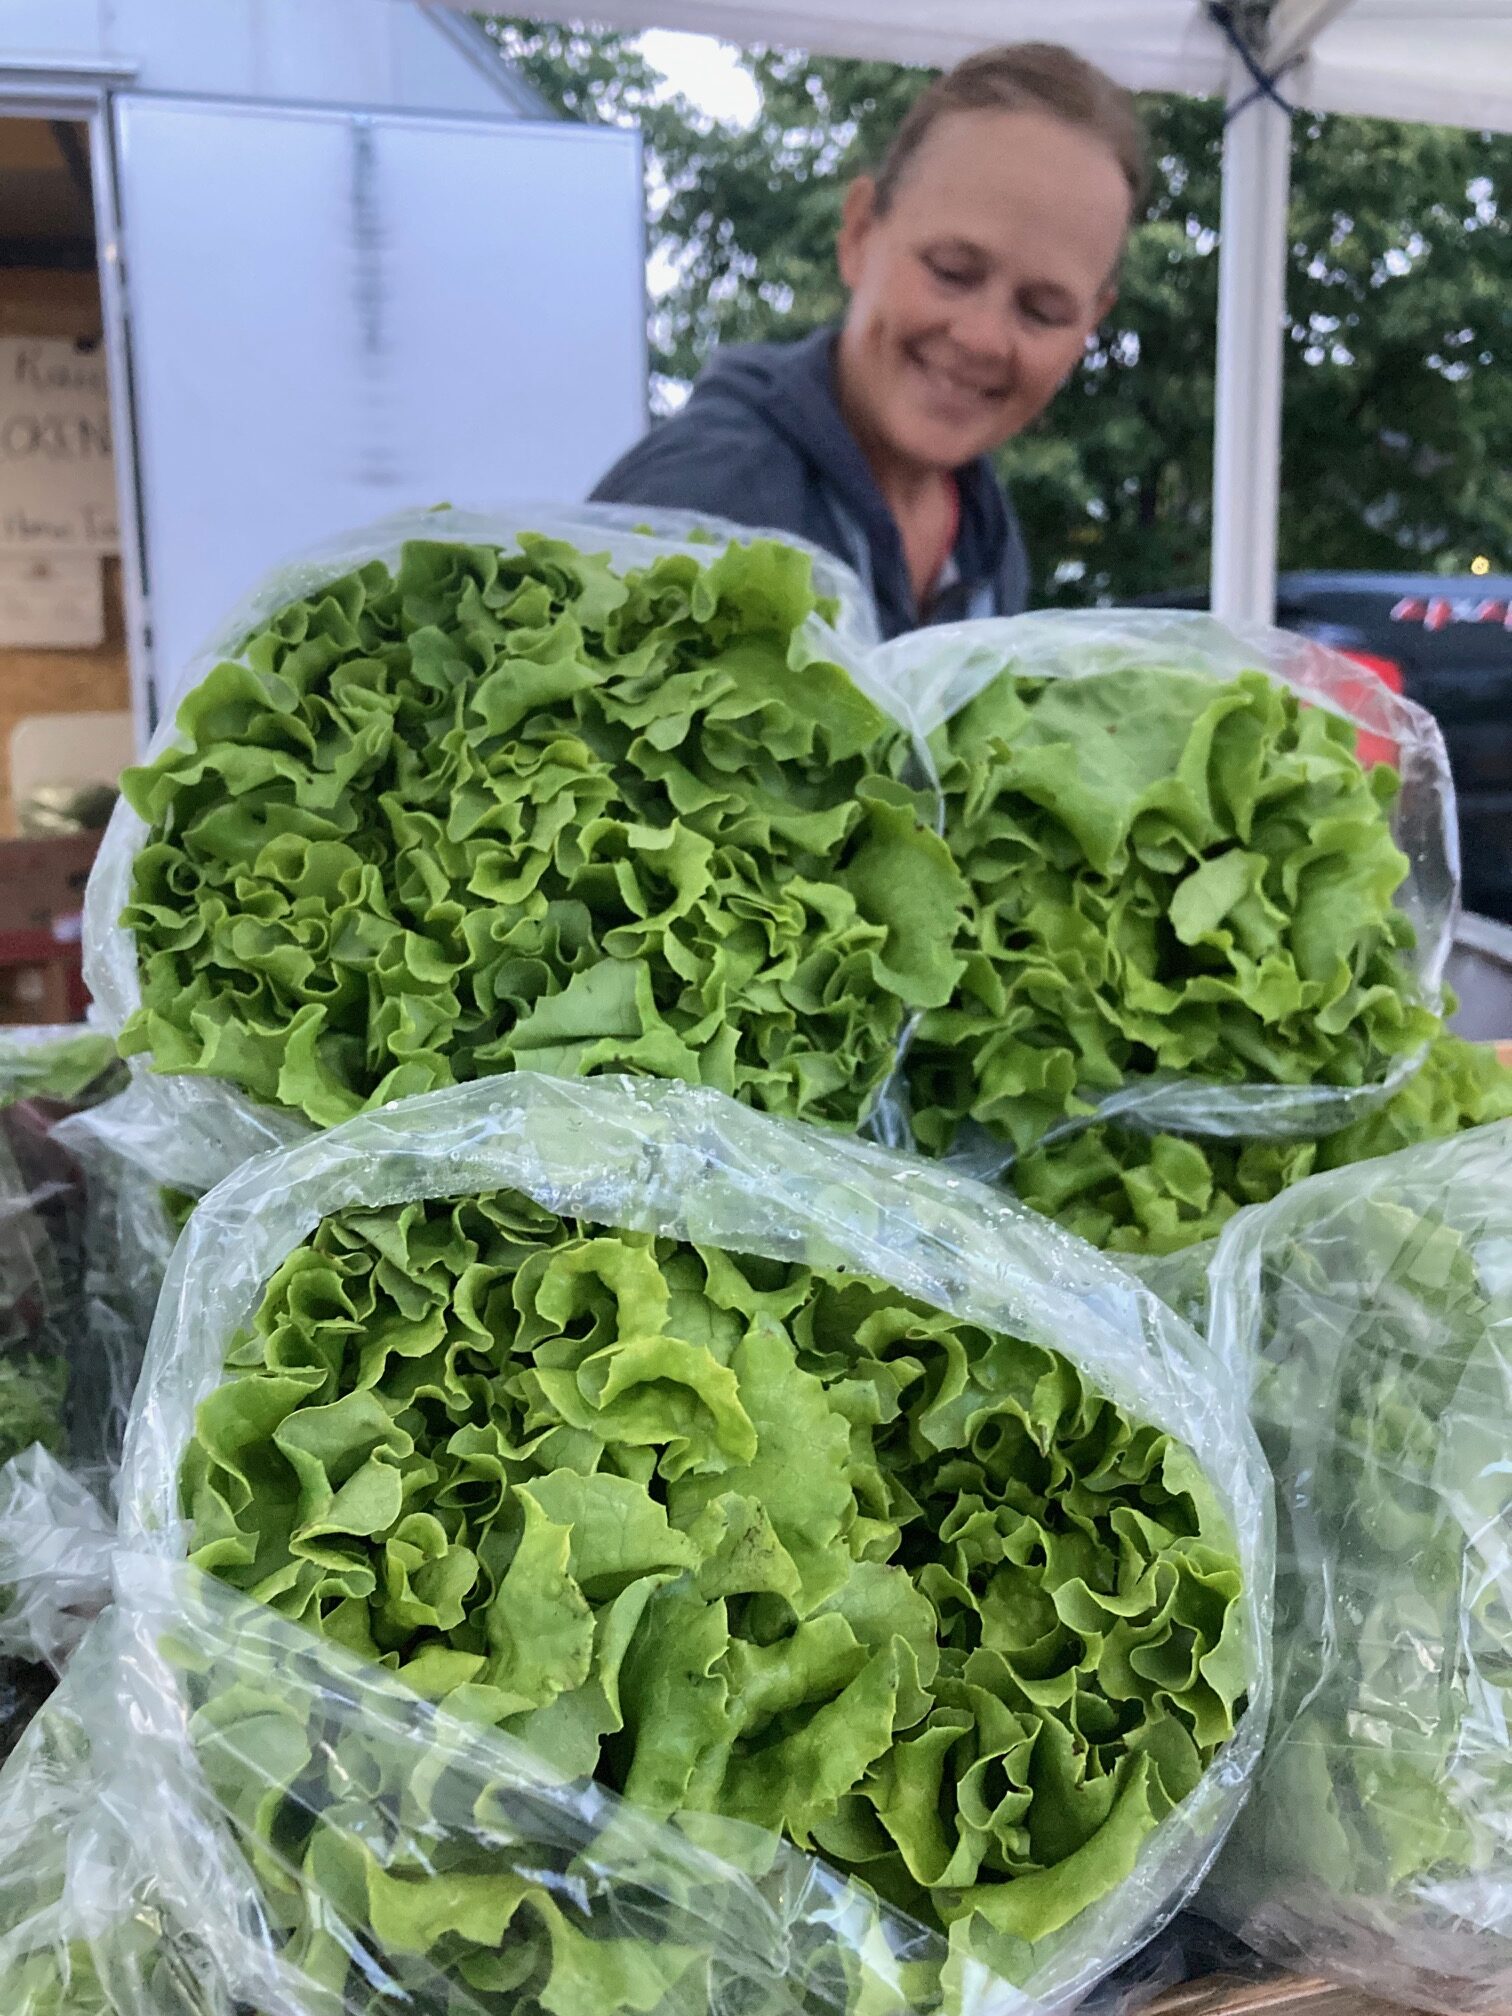 Farmer Janna fills the lettuce display at the Sioux City Farmer's Market